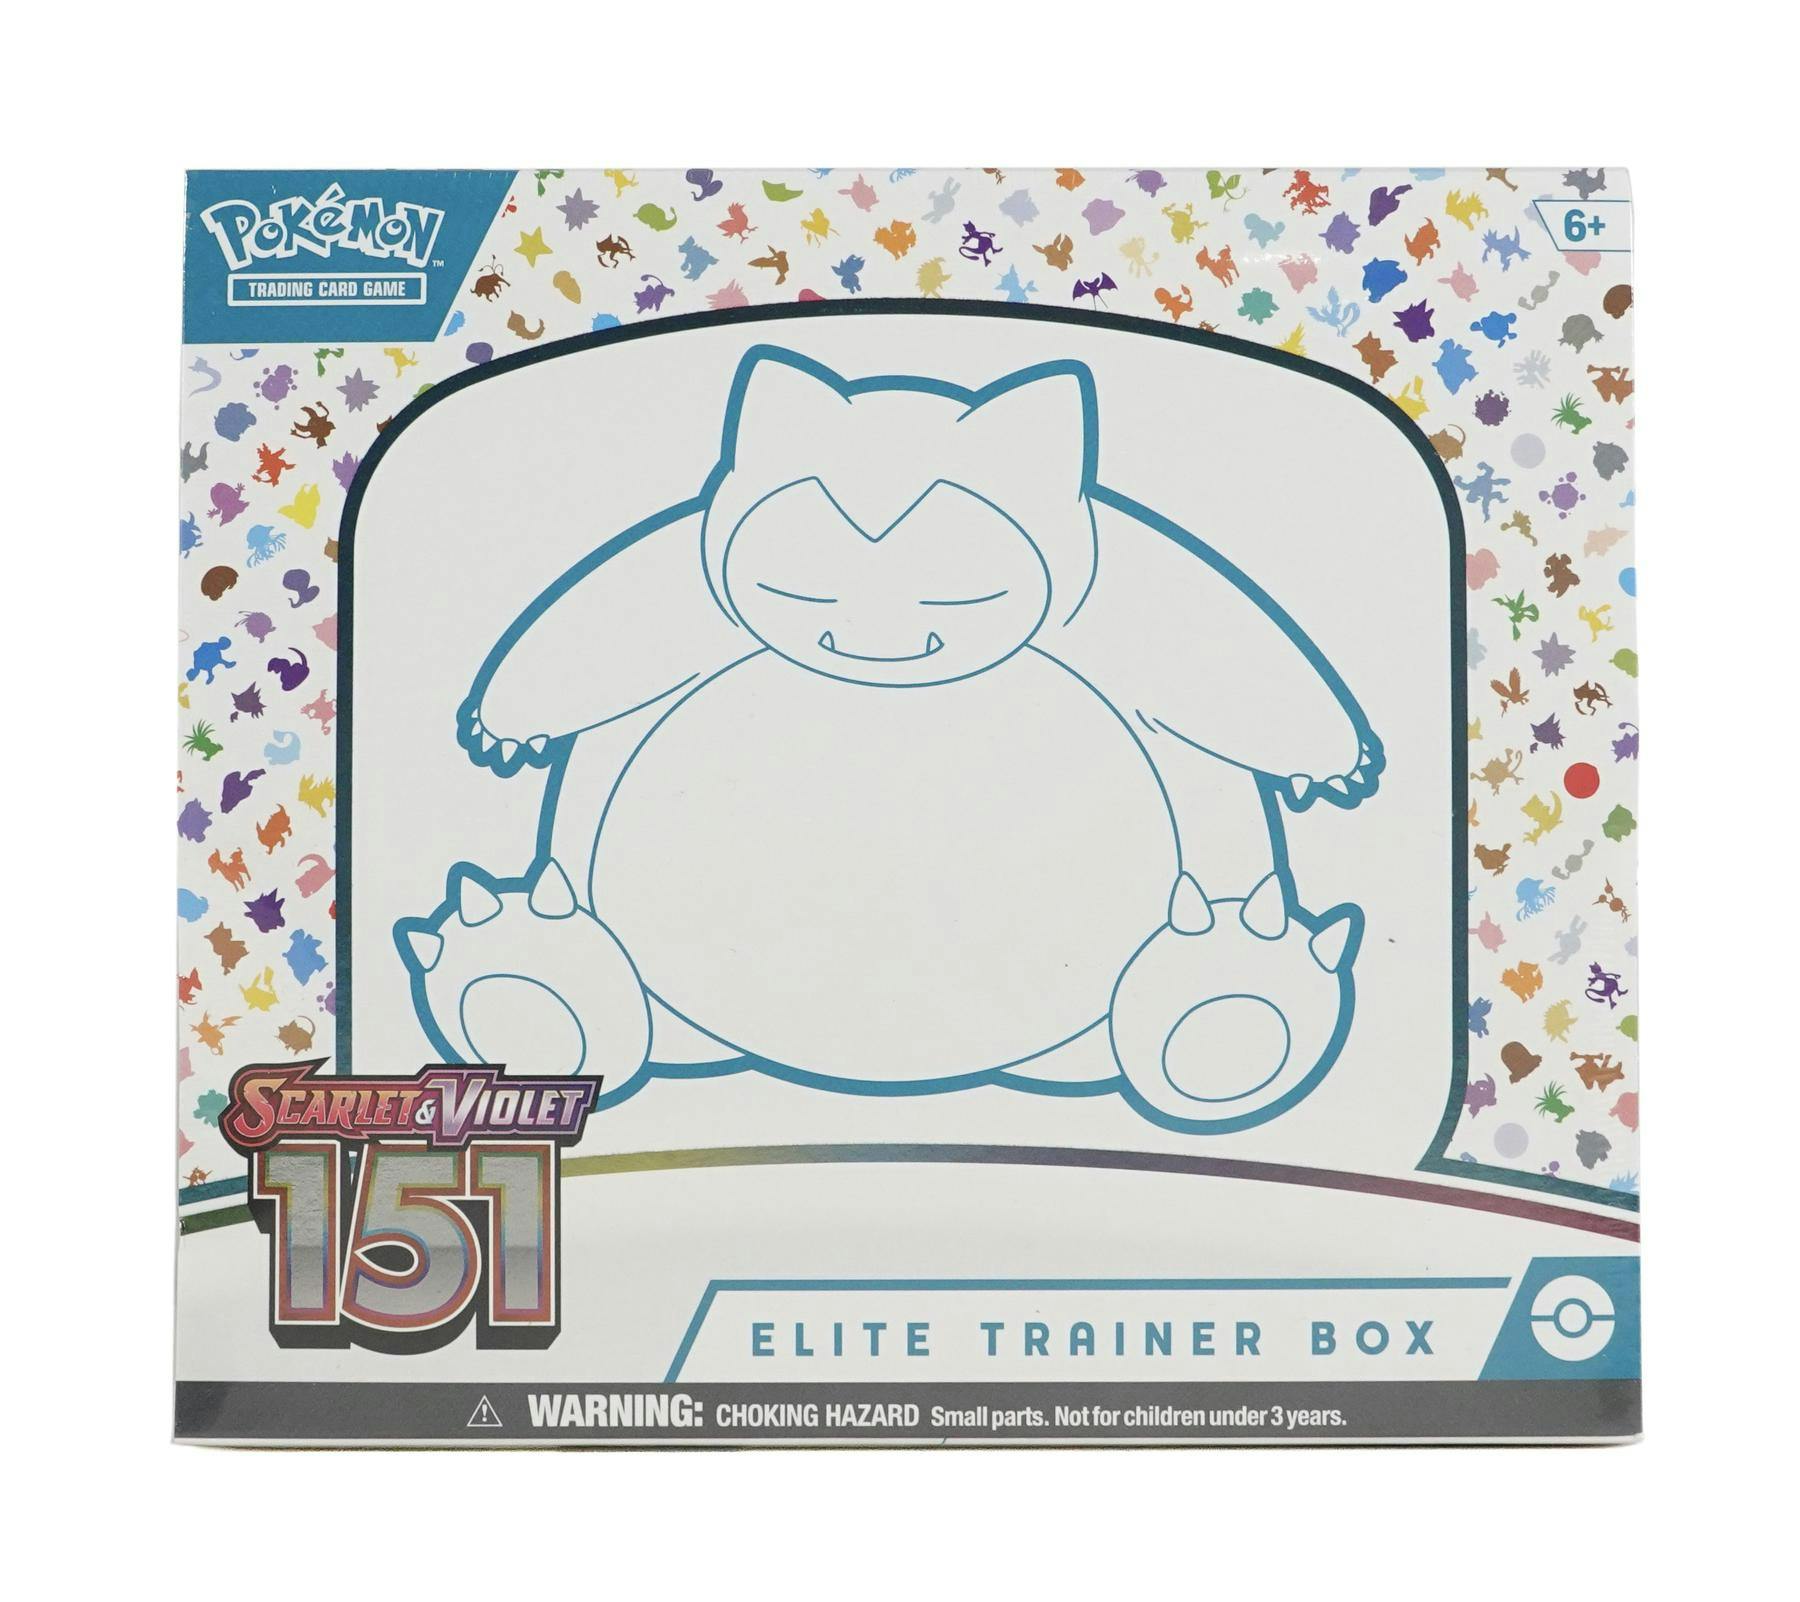 Pokémon: Scarlet & Violet - 151 Elite Trainer Box